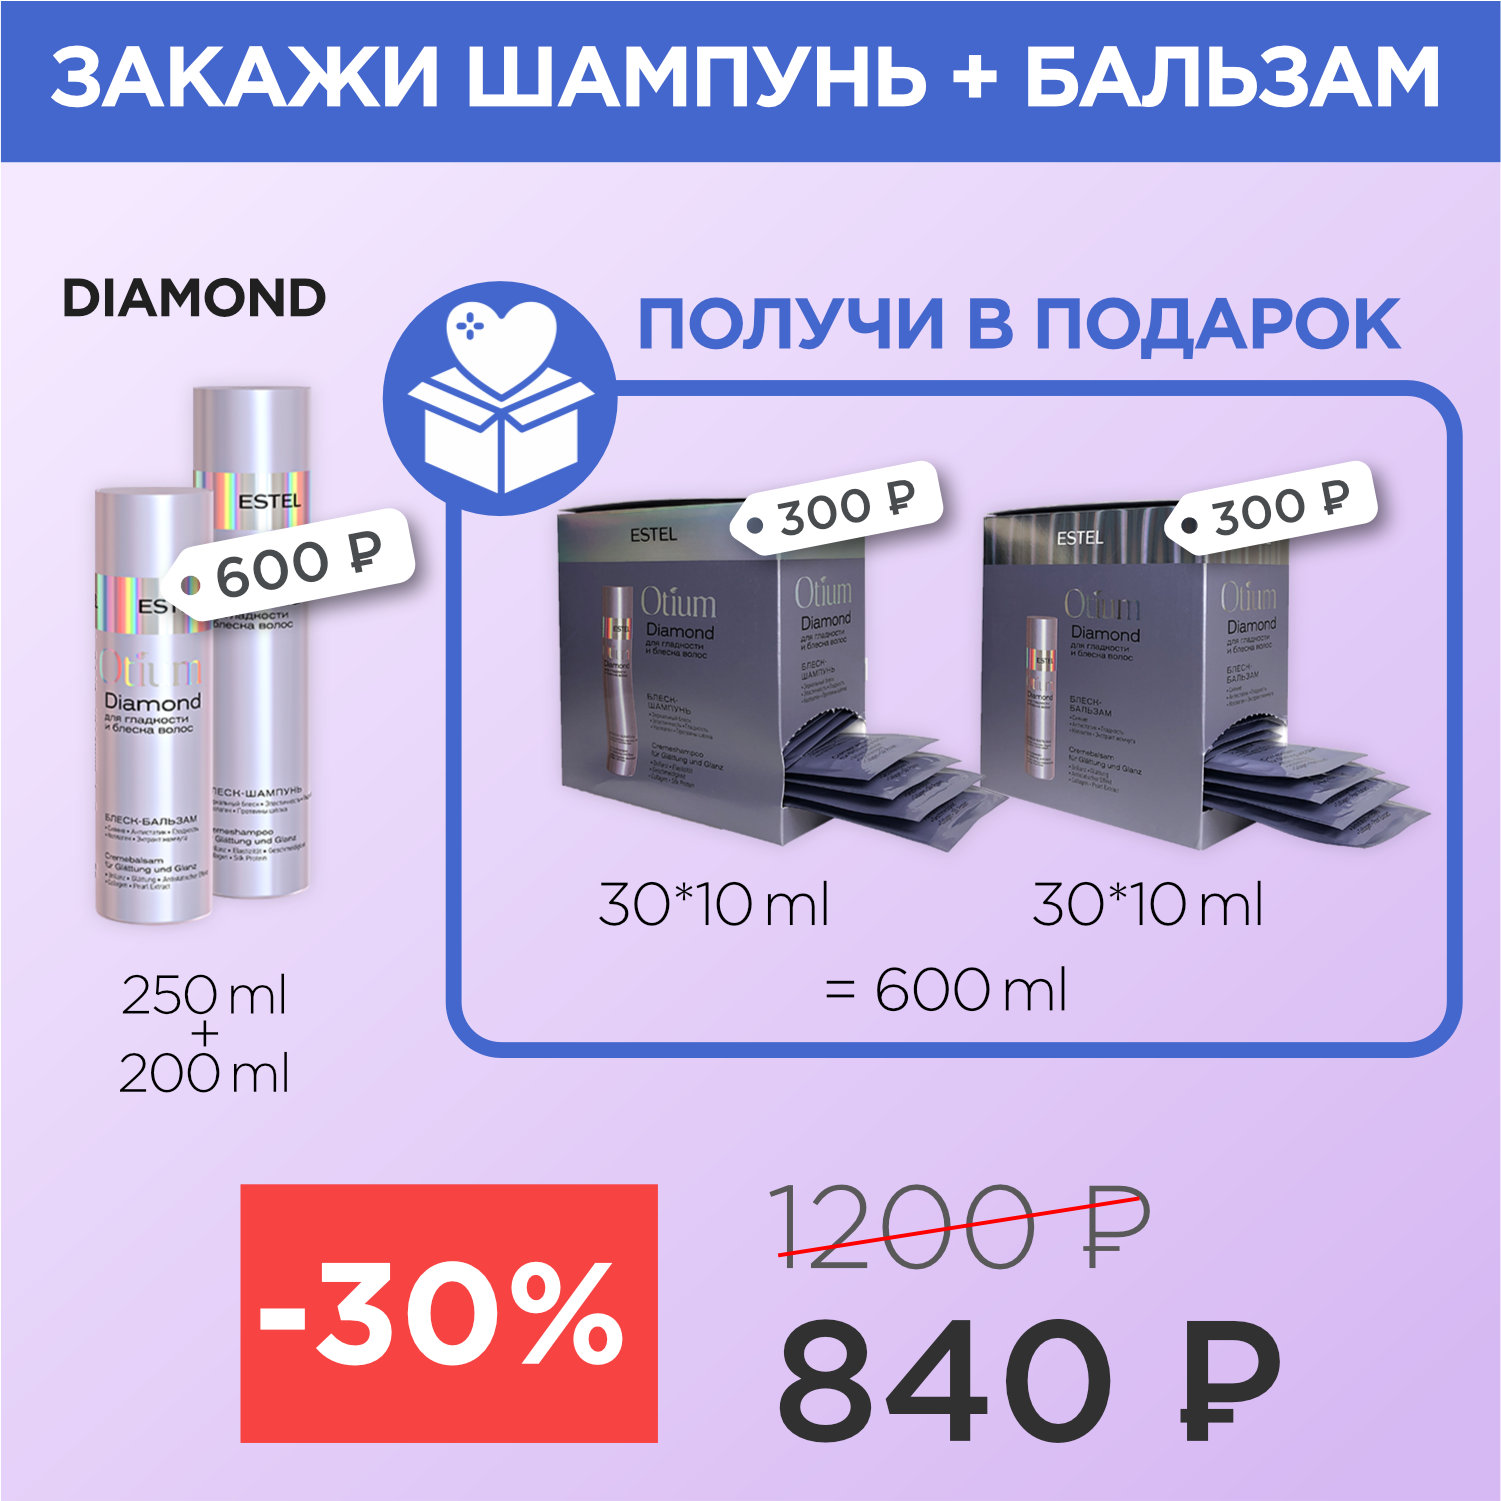 DIAMOND шампунь+бальзам+2 саше бокса (840р)